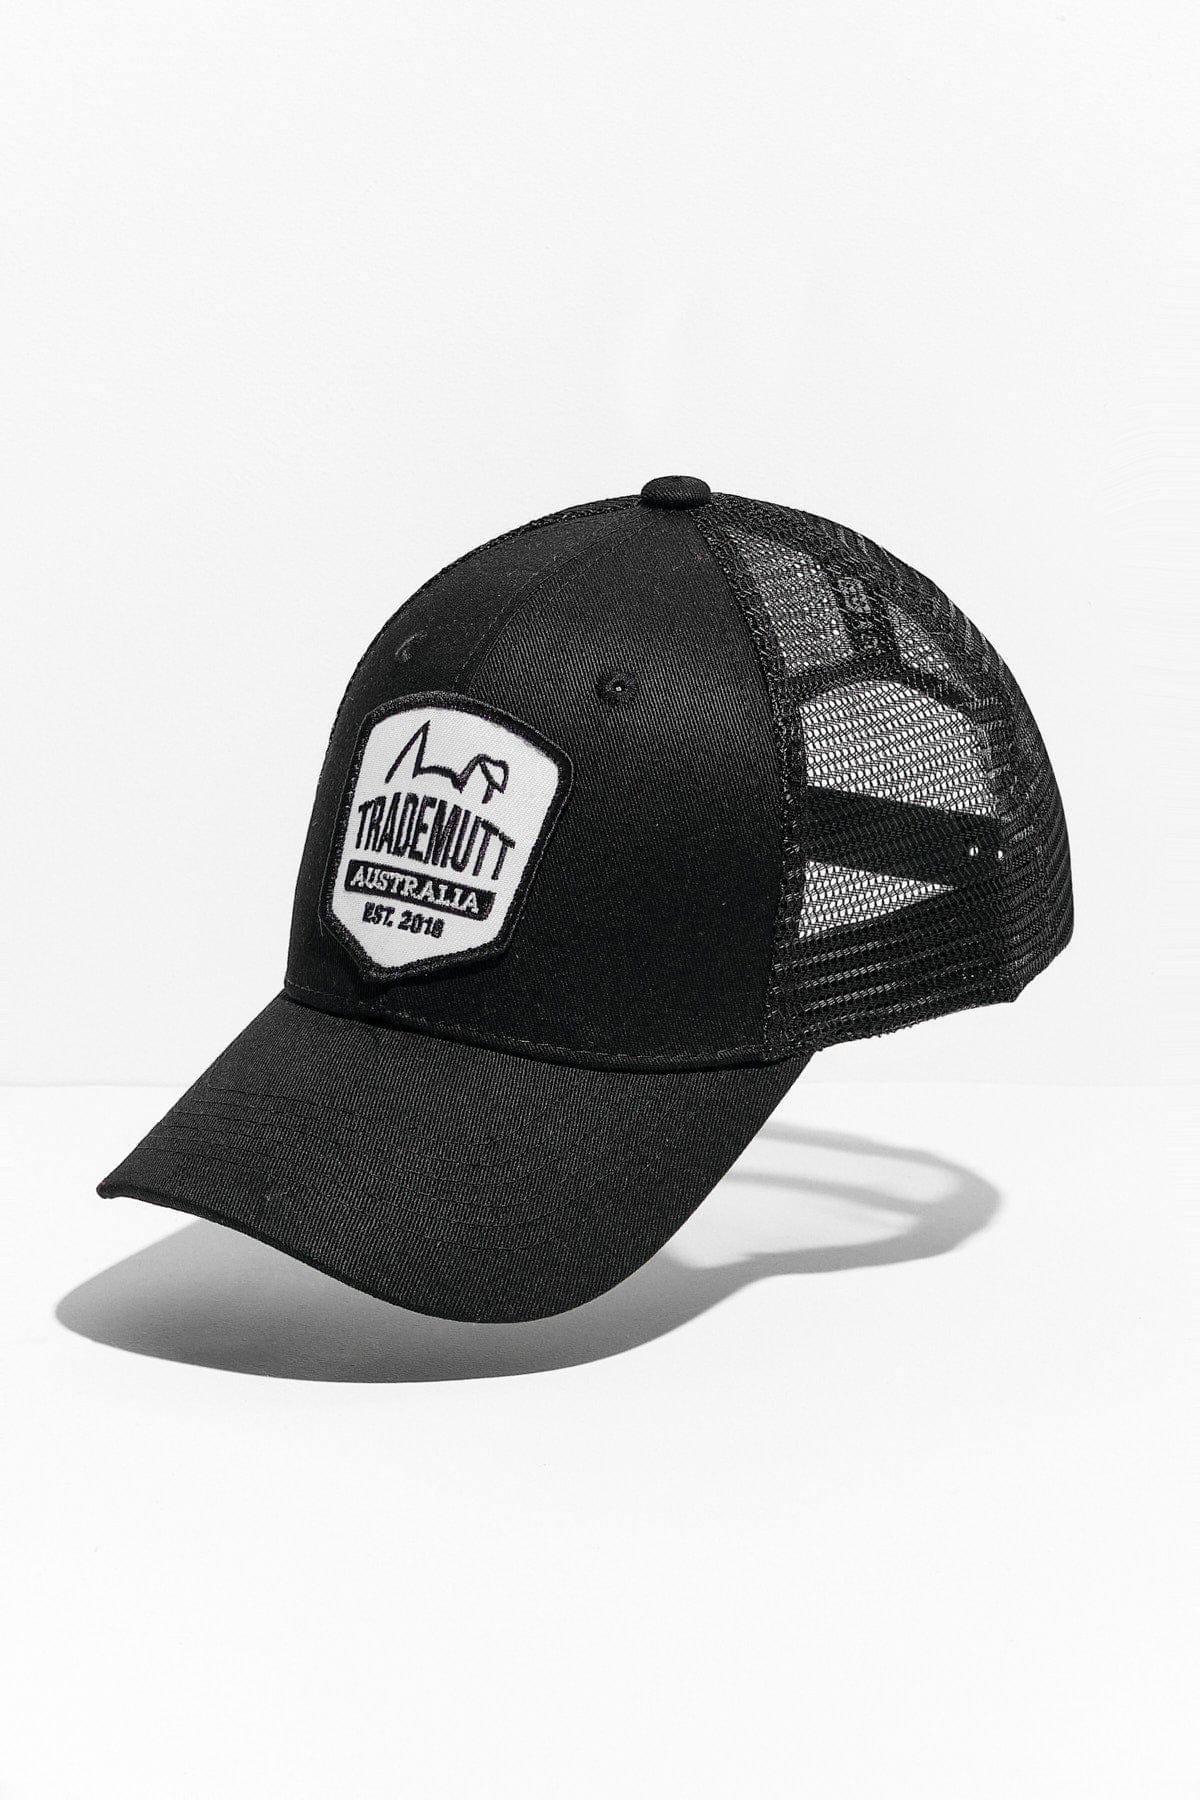 black-trucker-cap-trademutt-hats-front